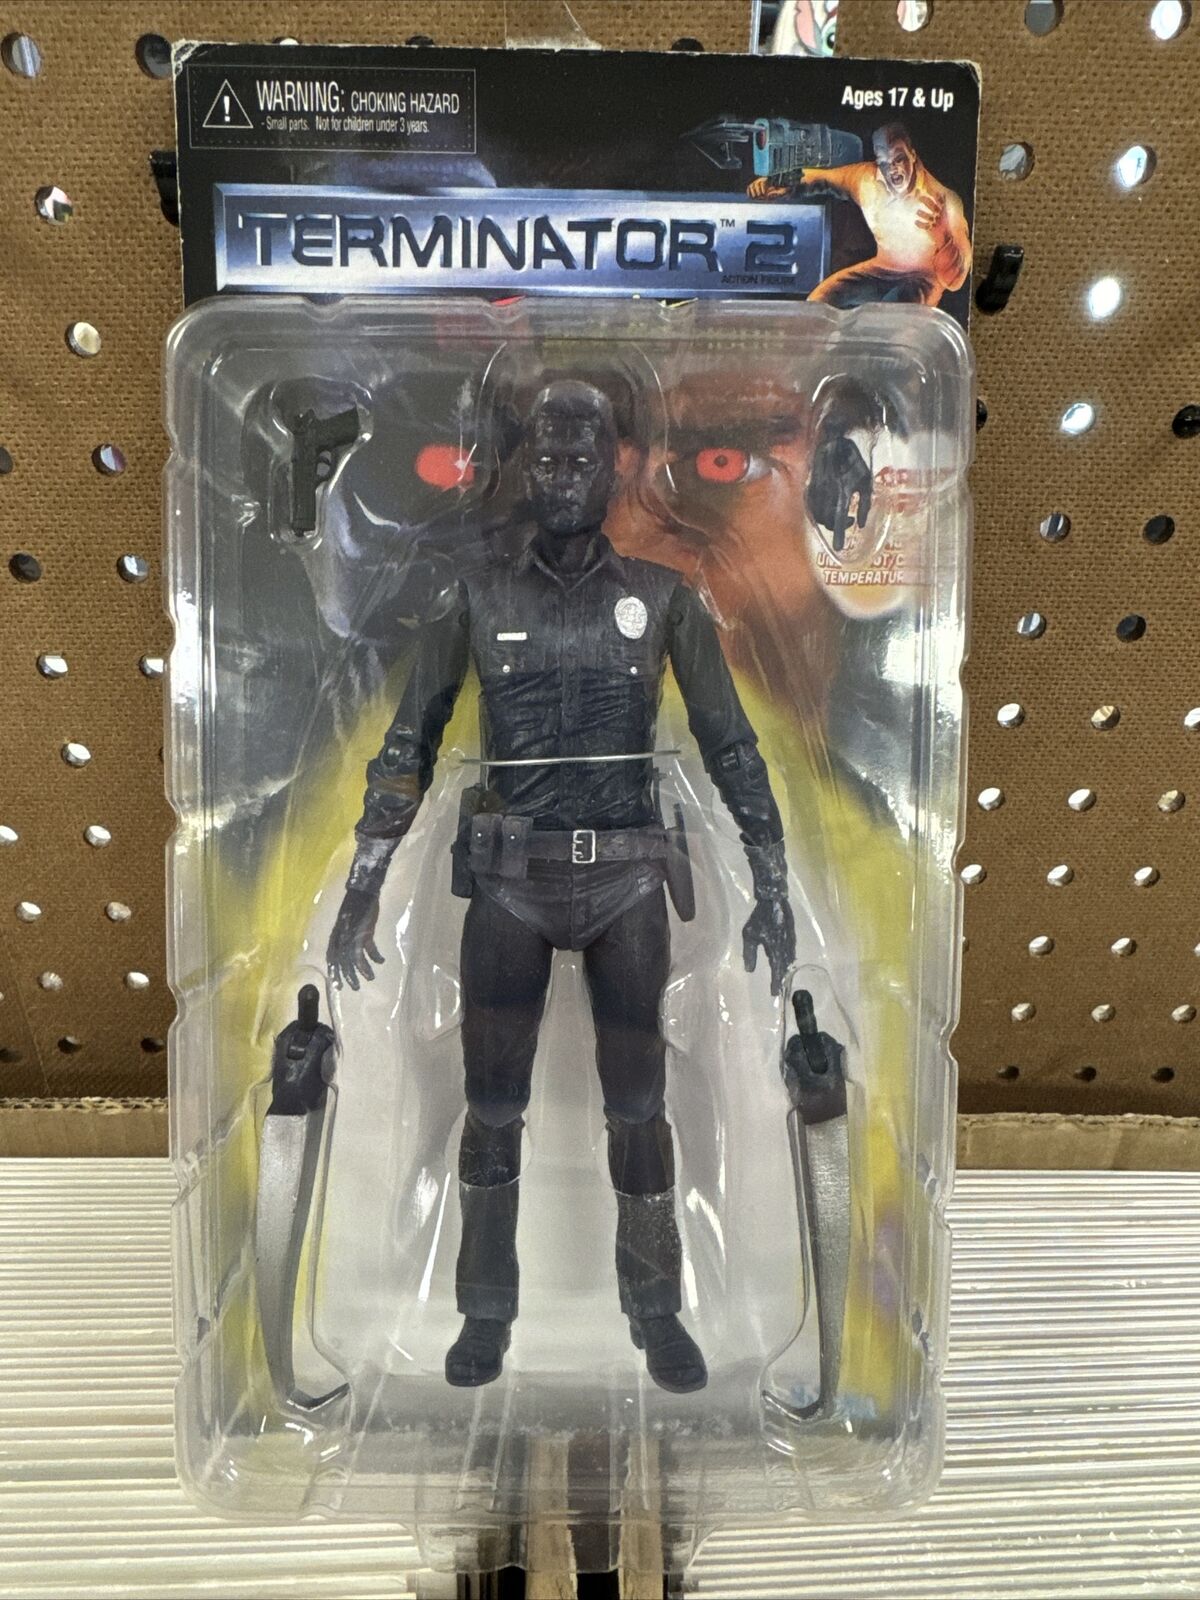 NECA Terminator 2 White Hot T-1000 Action Figure Sealed Never Opened